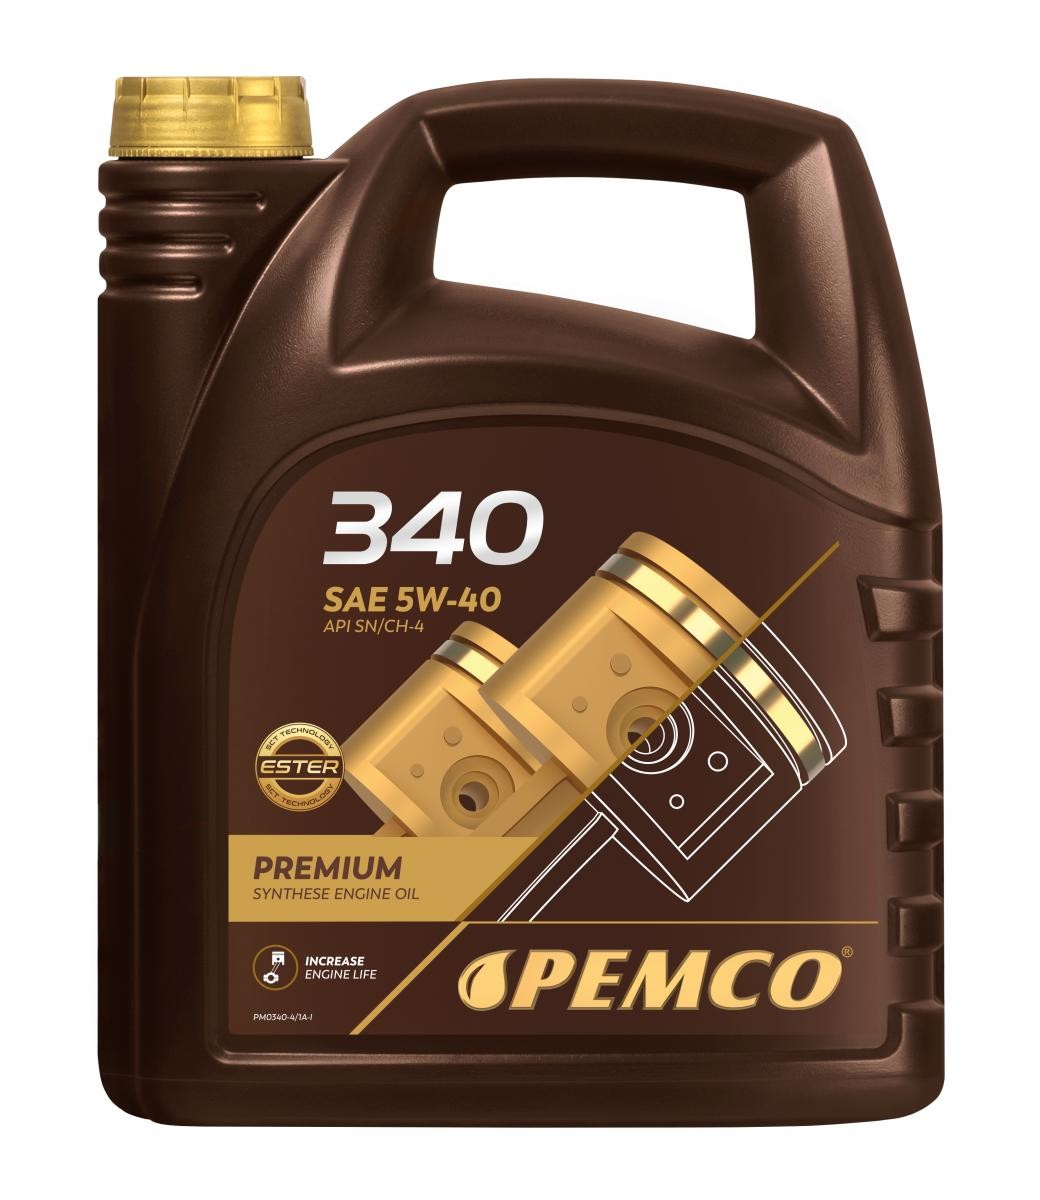 PEMCO iDRIVE 300, iDRIVE 340 5W-40, 4l, Synthetic Oil Motor oil PM0340-4 buy